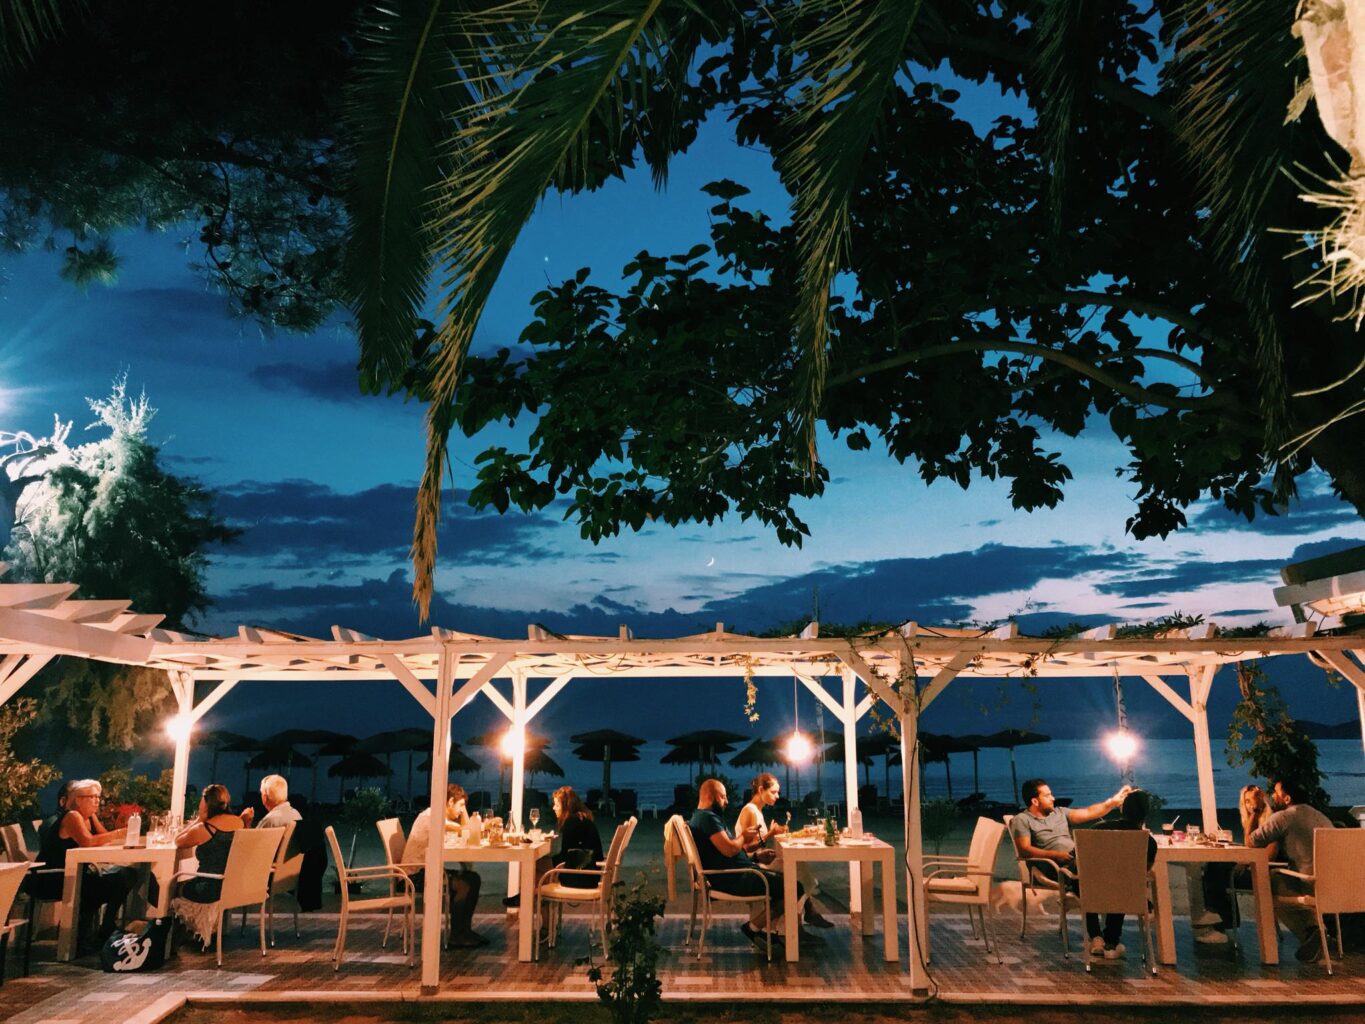 Restaurant San Atonio din Potos, Thassos, fotografiat seara, cu o pergola din lemn si marea in fundal, mese asezate dedesubt si oaspeti care iau masa